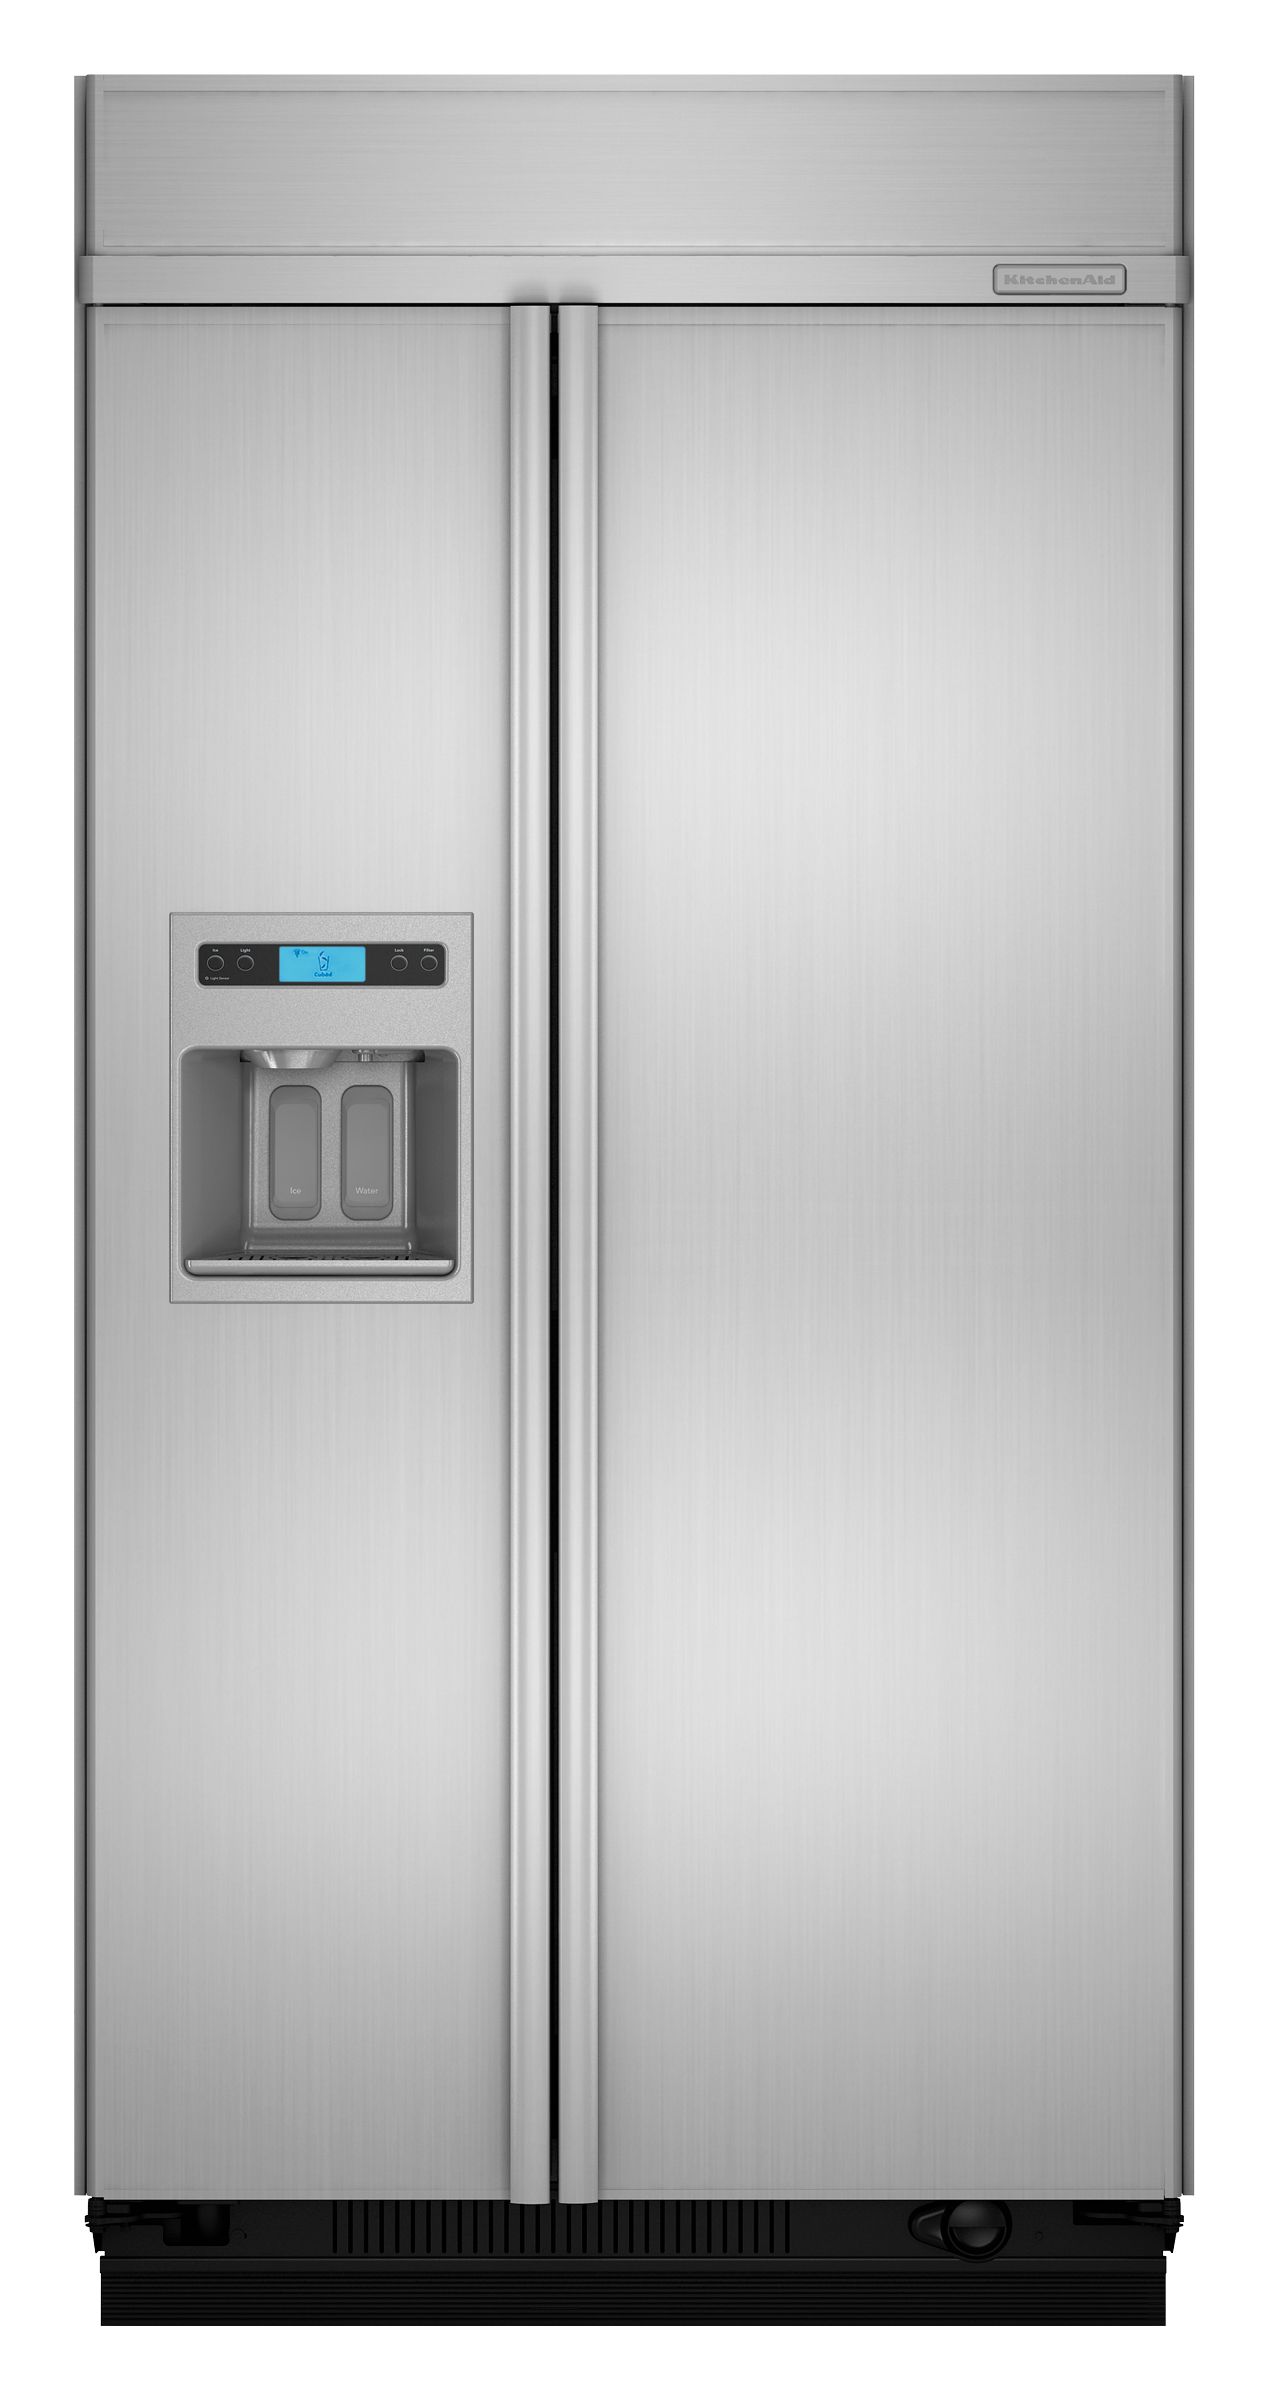 Built-In Side-By-Side Refrigerator logo